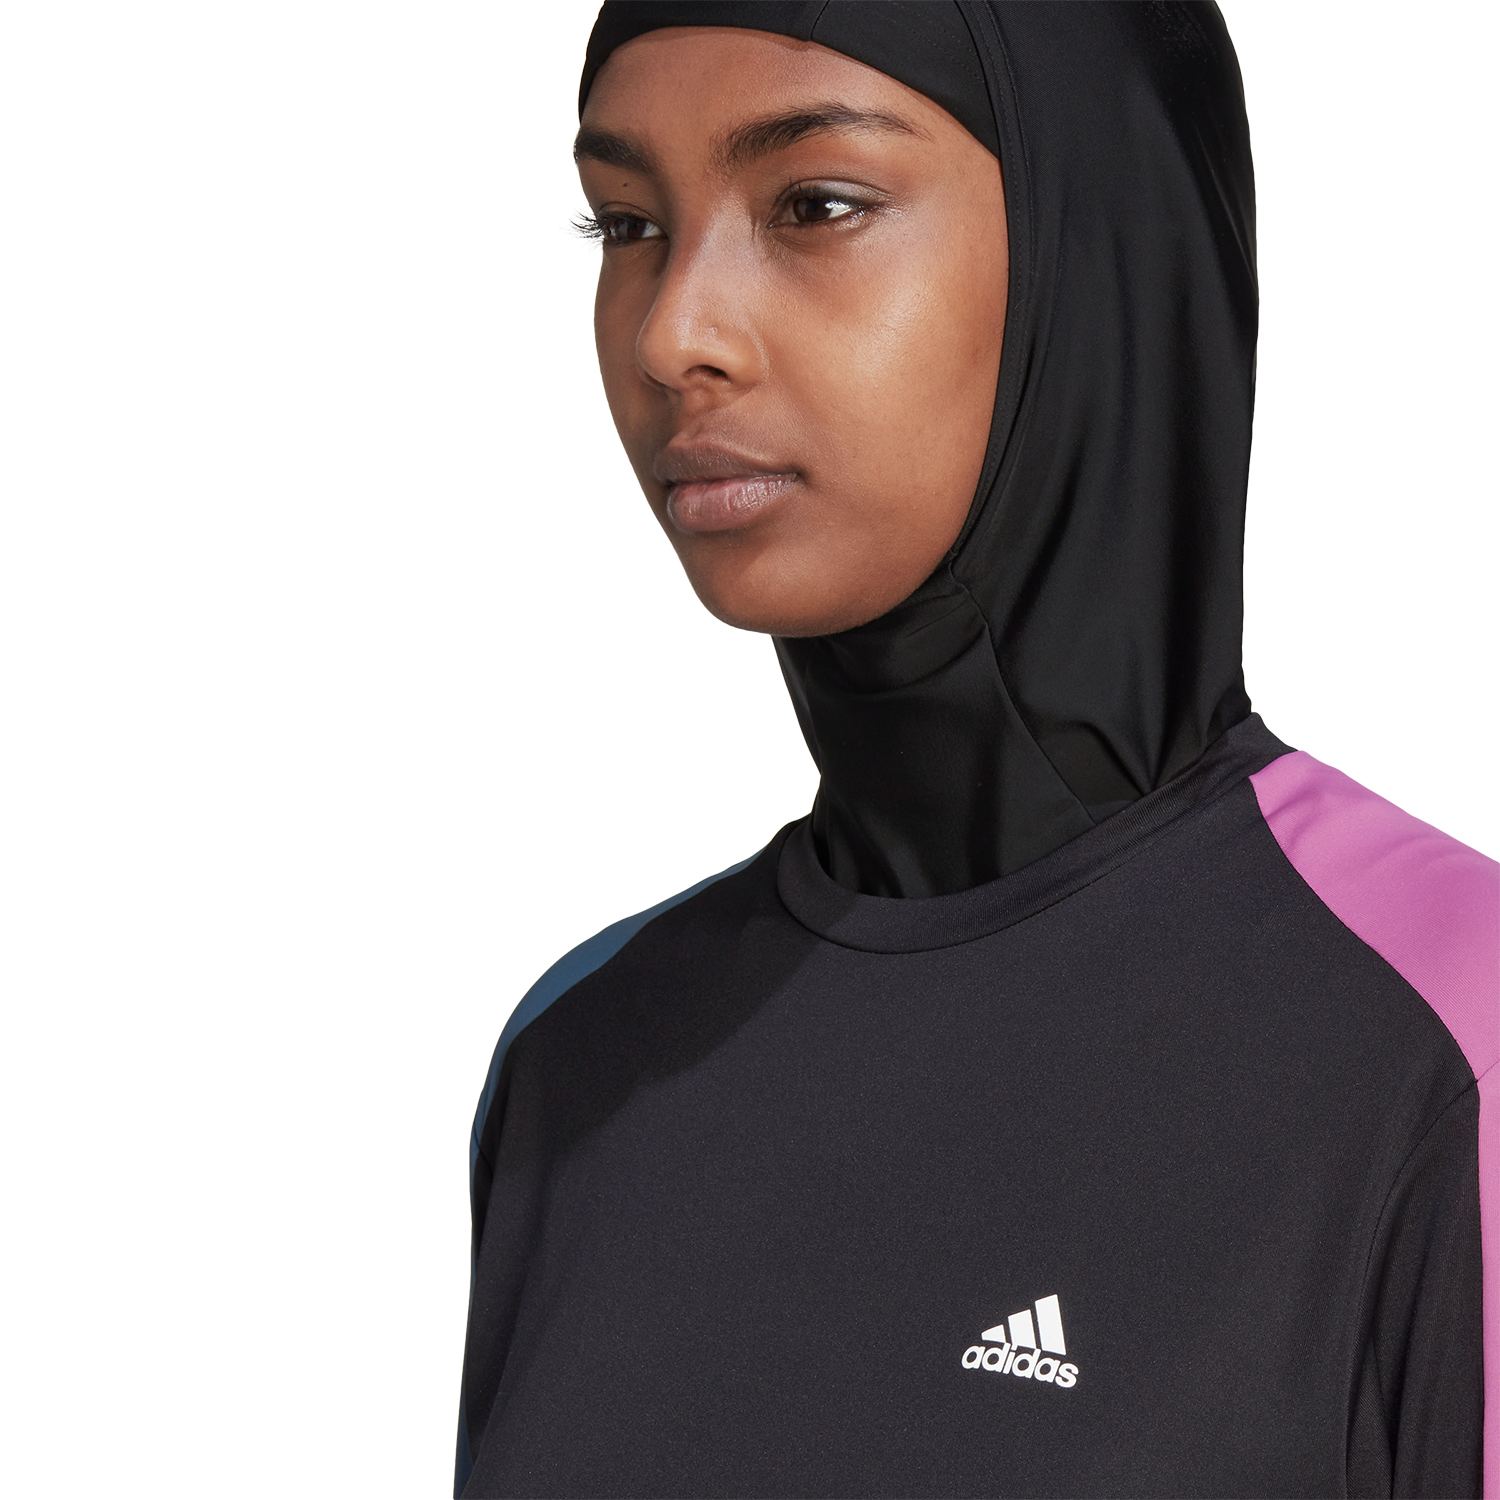 adidas Color Block Women's Running Shirt - Black